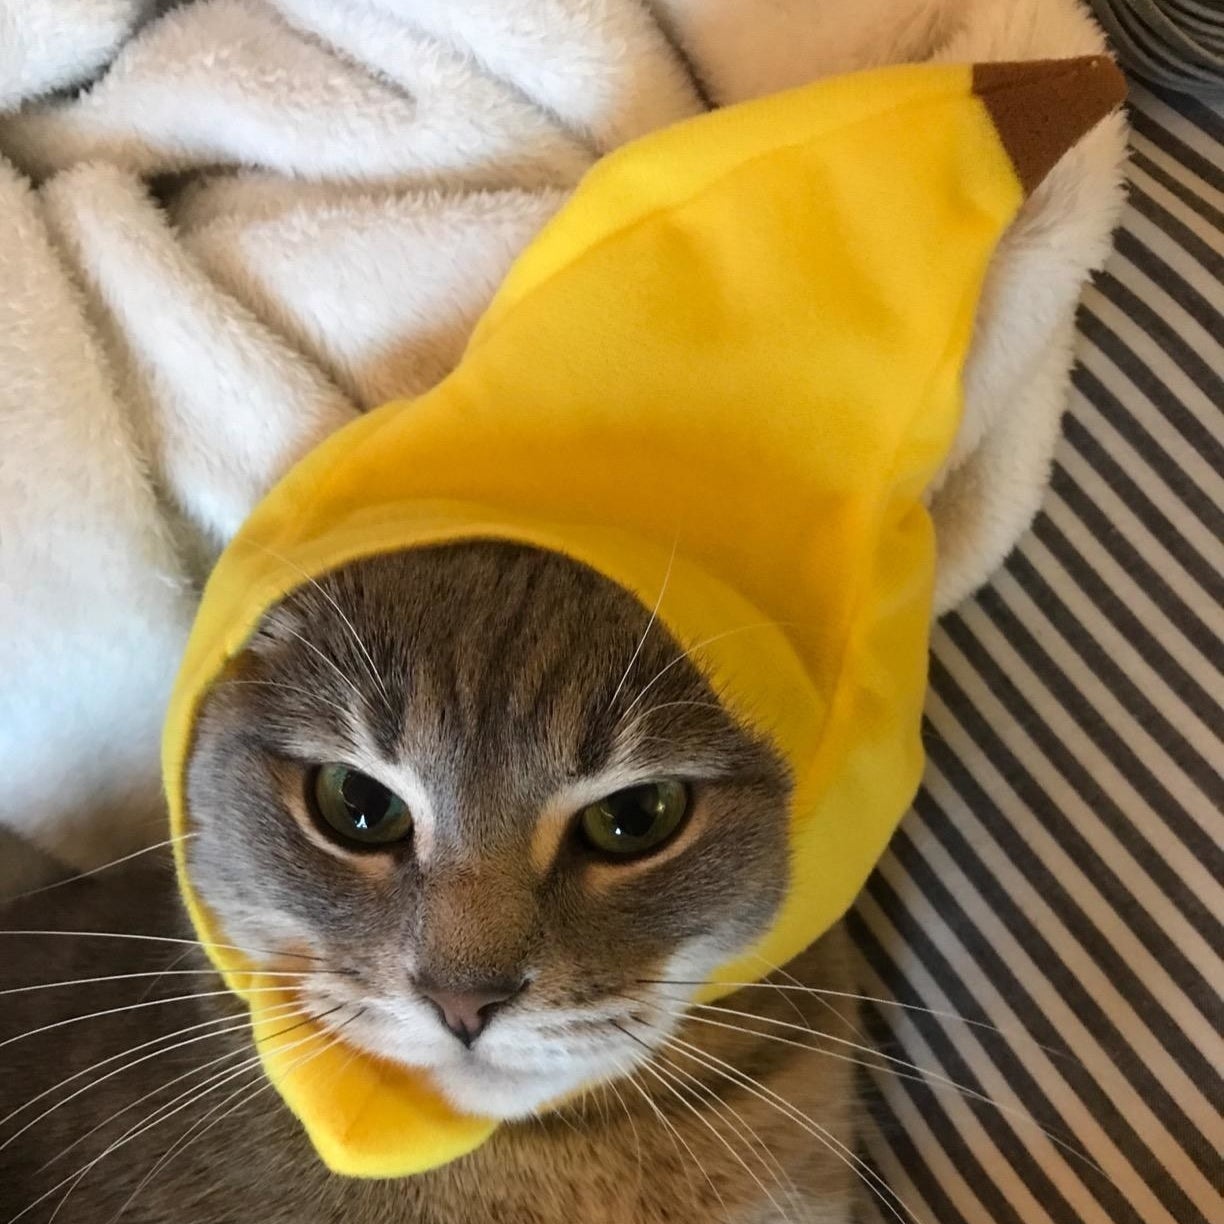 Cat wearing a banana hat